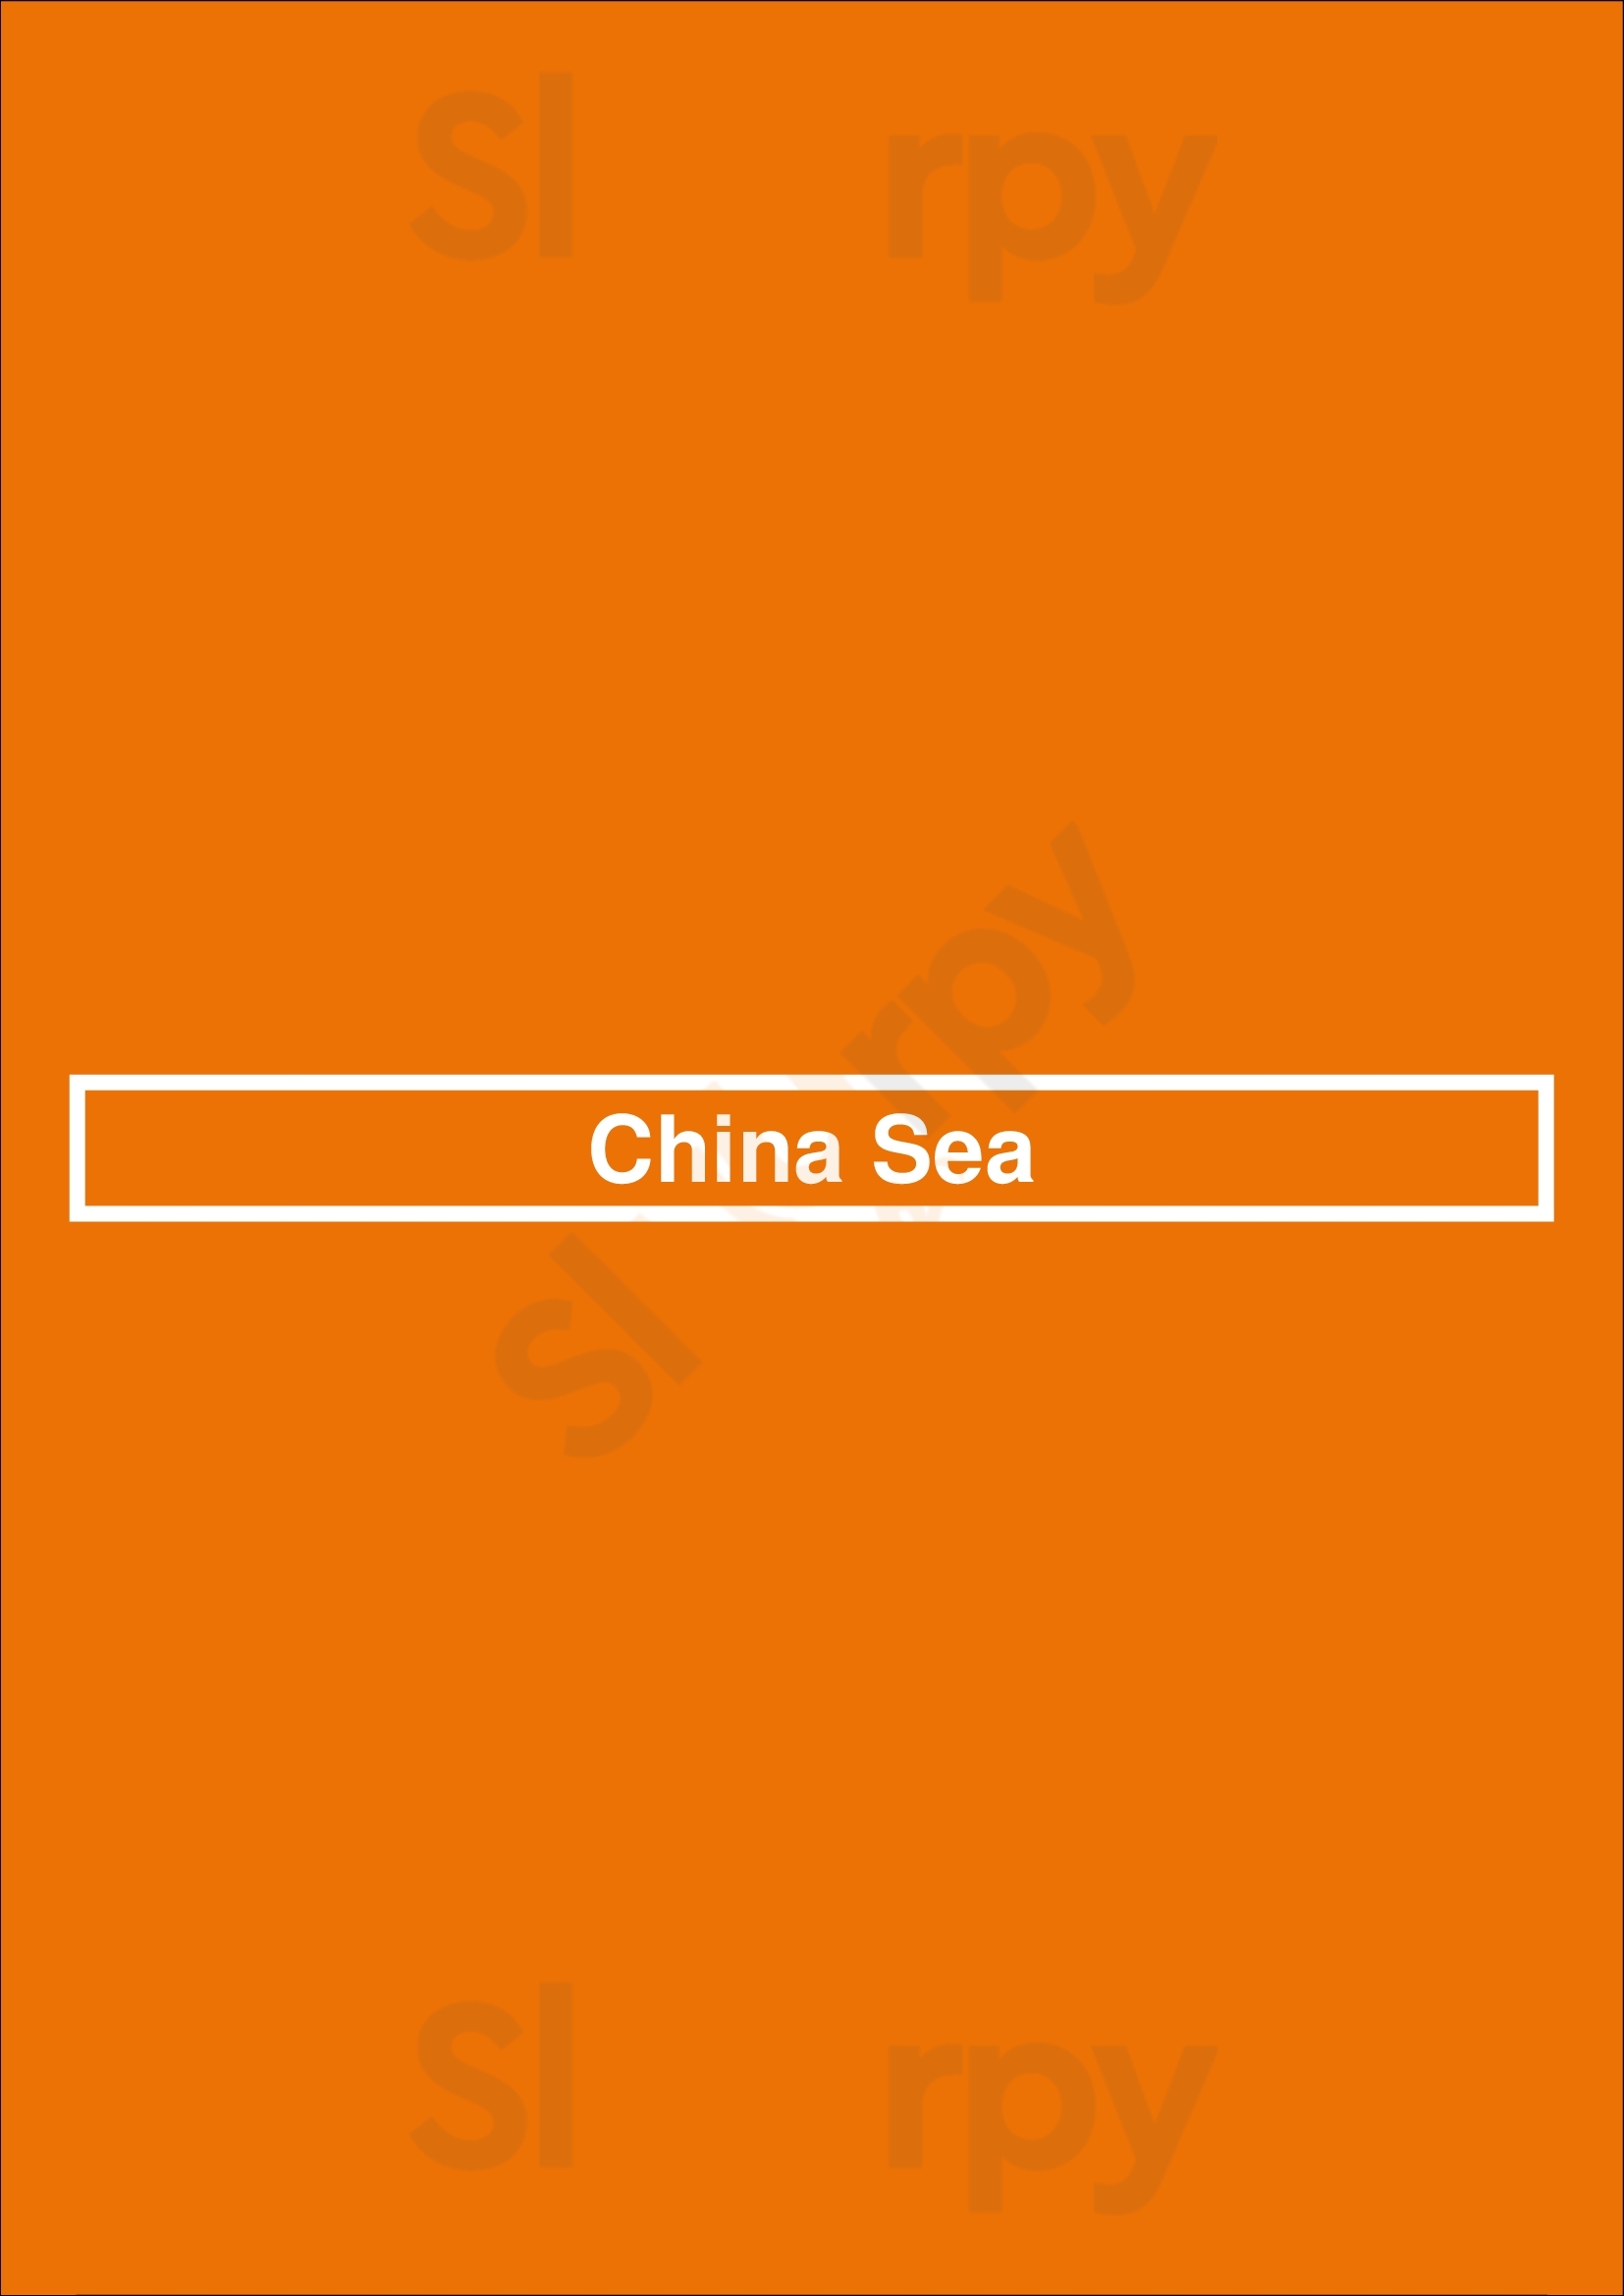 China Sea Cleveland Menu - 1